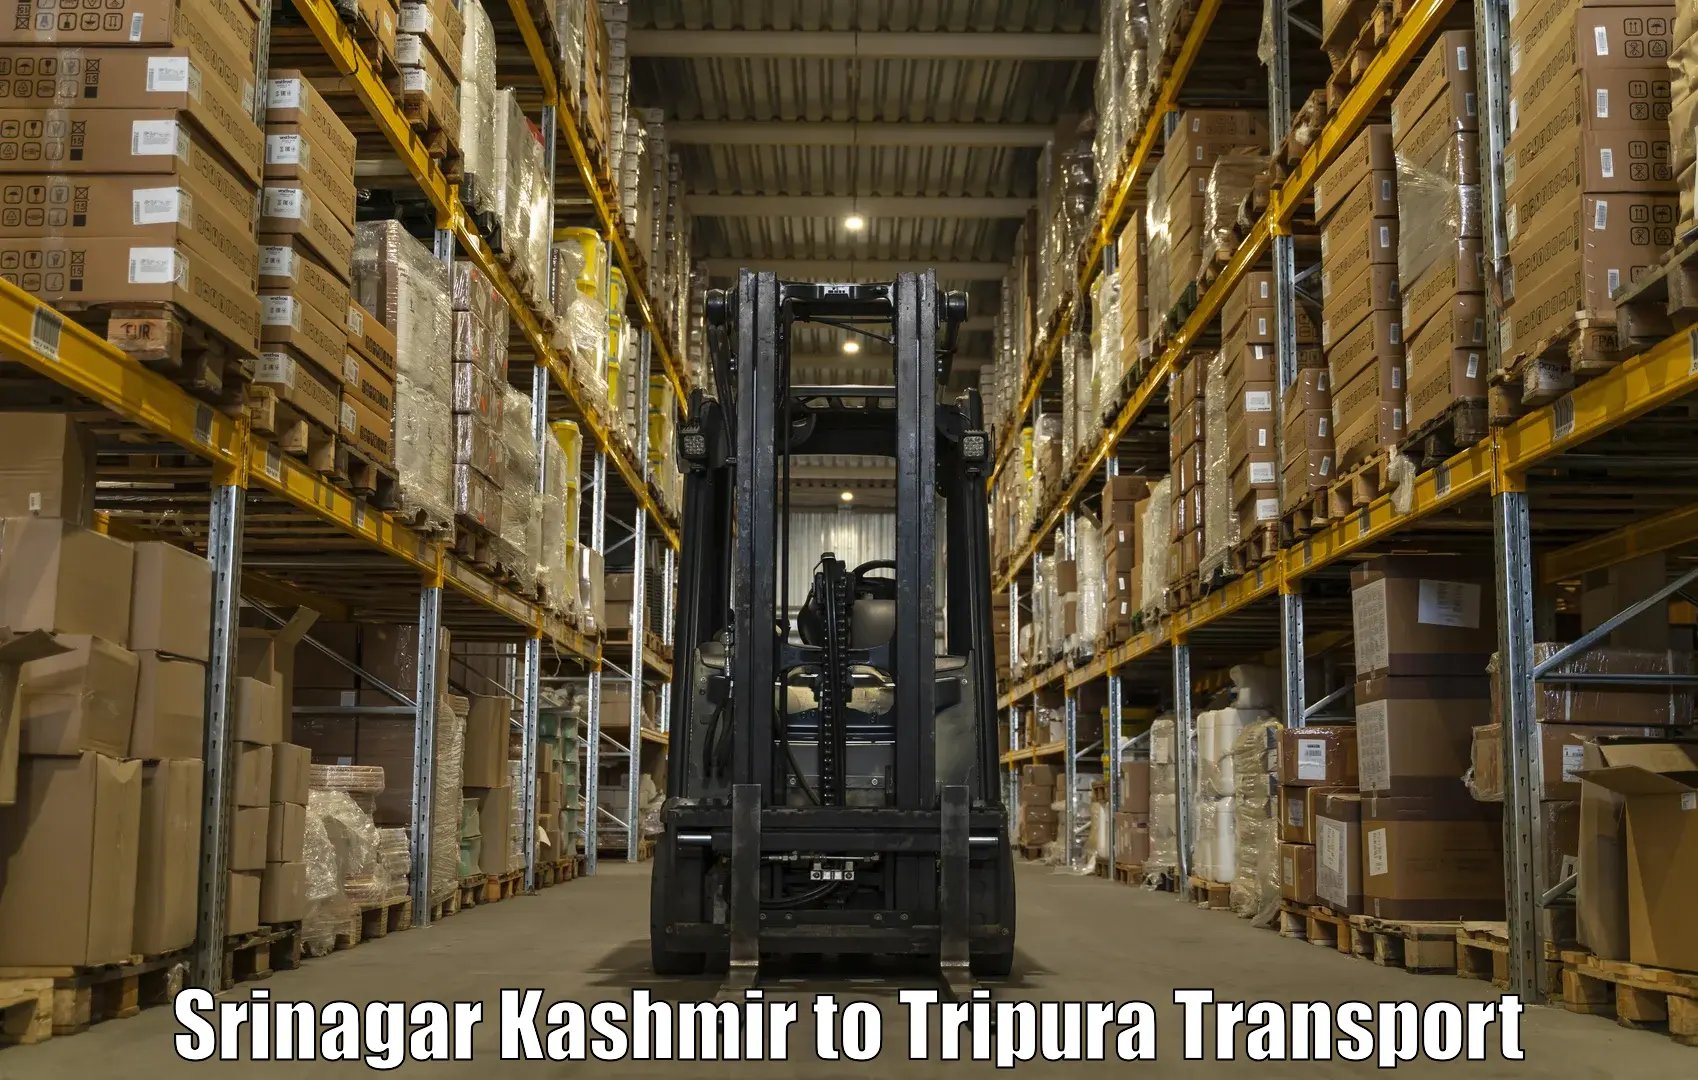 Truck transport companies in India Srinagar Kashmir to Manughat